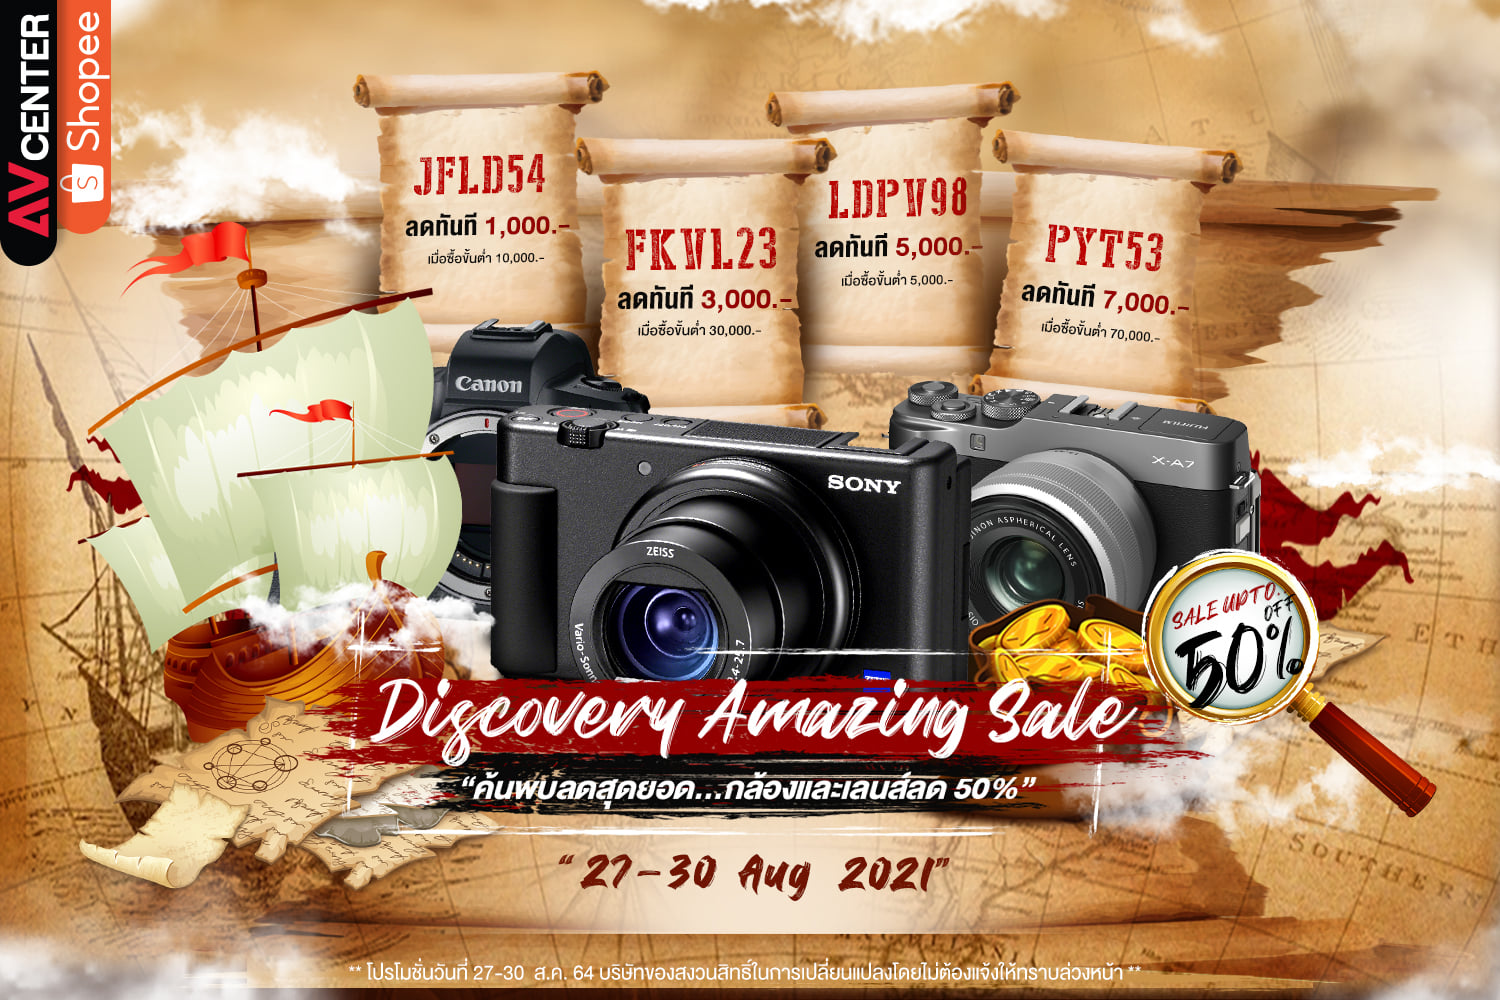 Discovery Amazing Sale ค้นพบลดสุดยอด กล้องและเลนส์ลด 50%